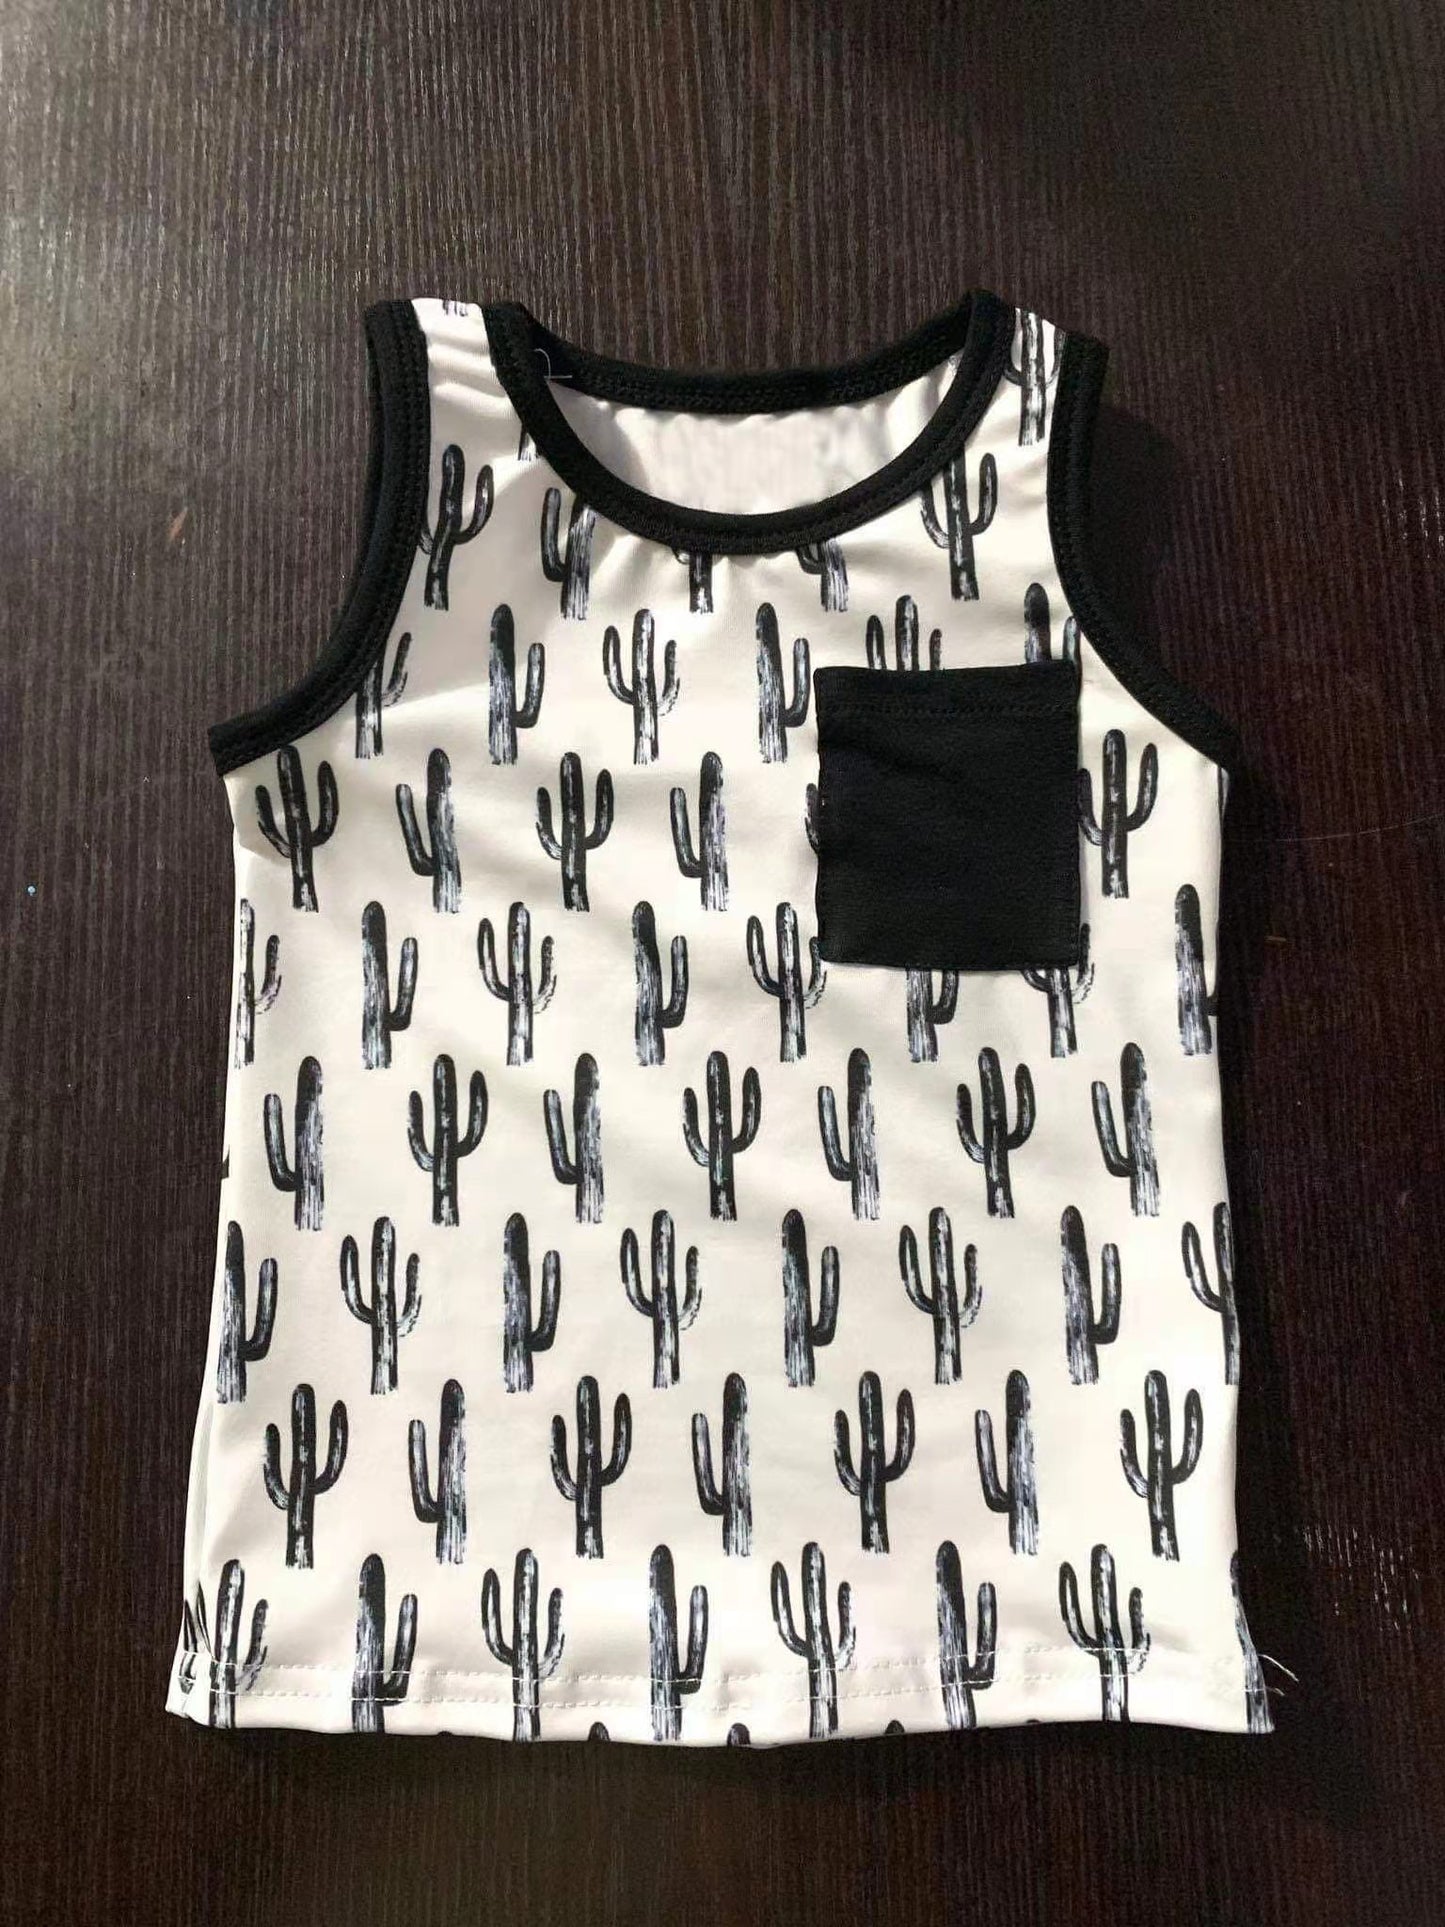 summer boy's clothing cactus tank top shirt